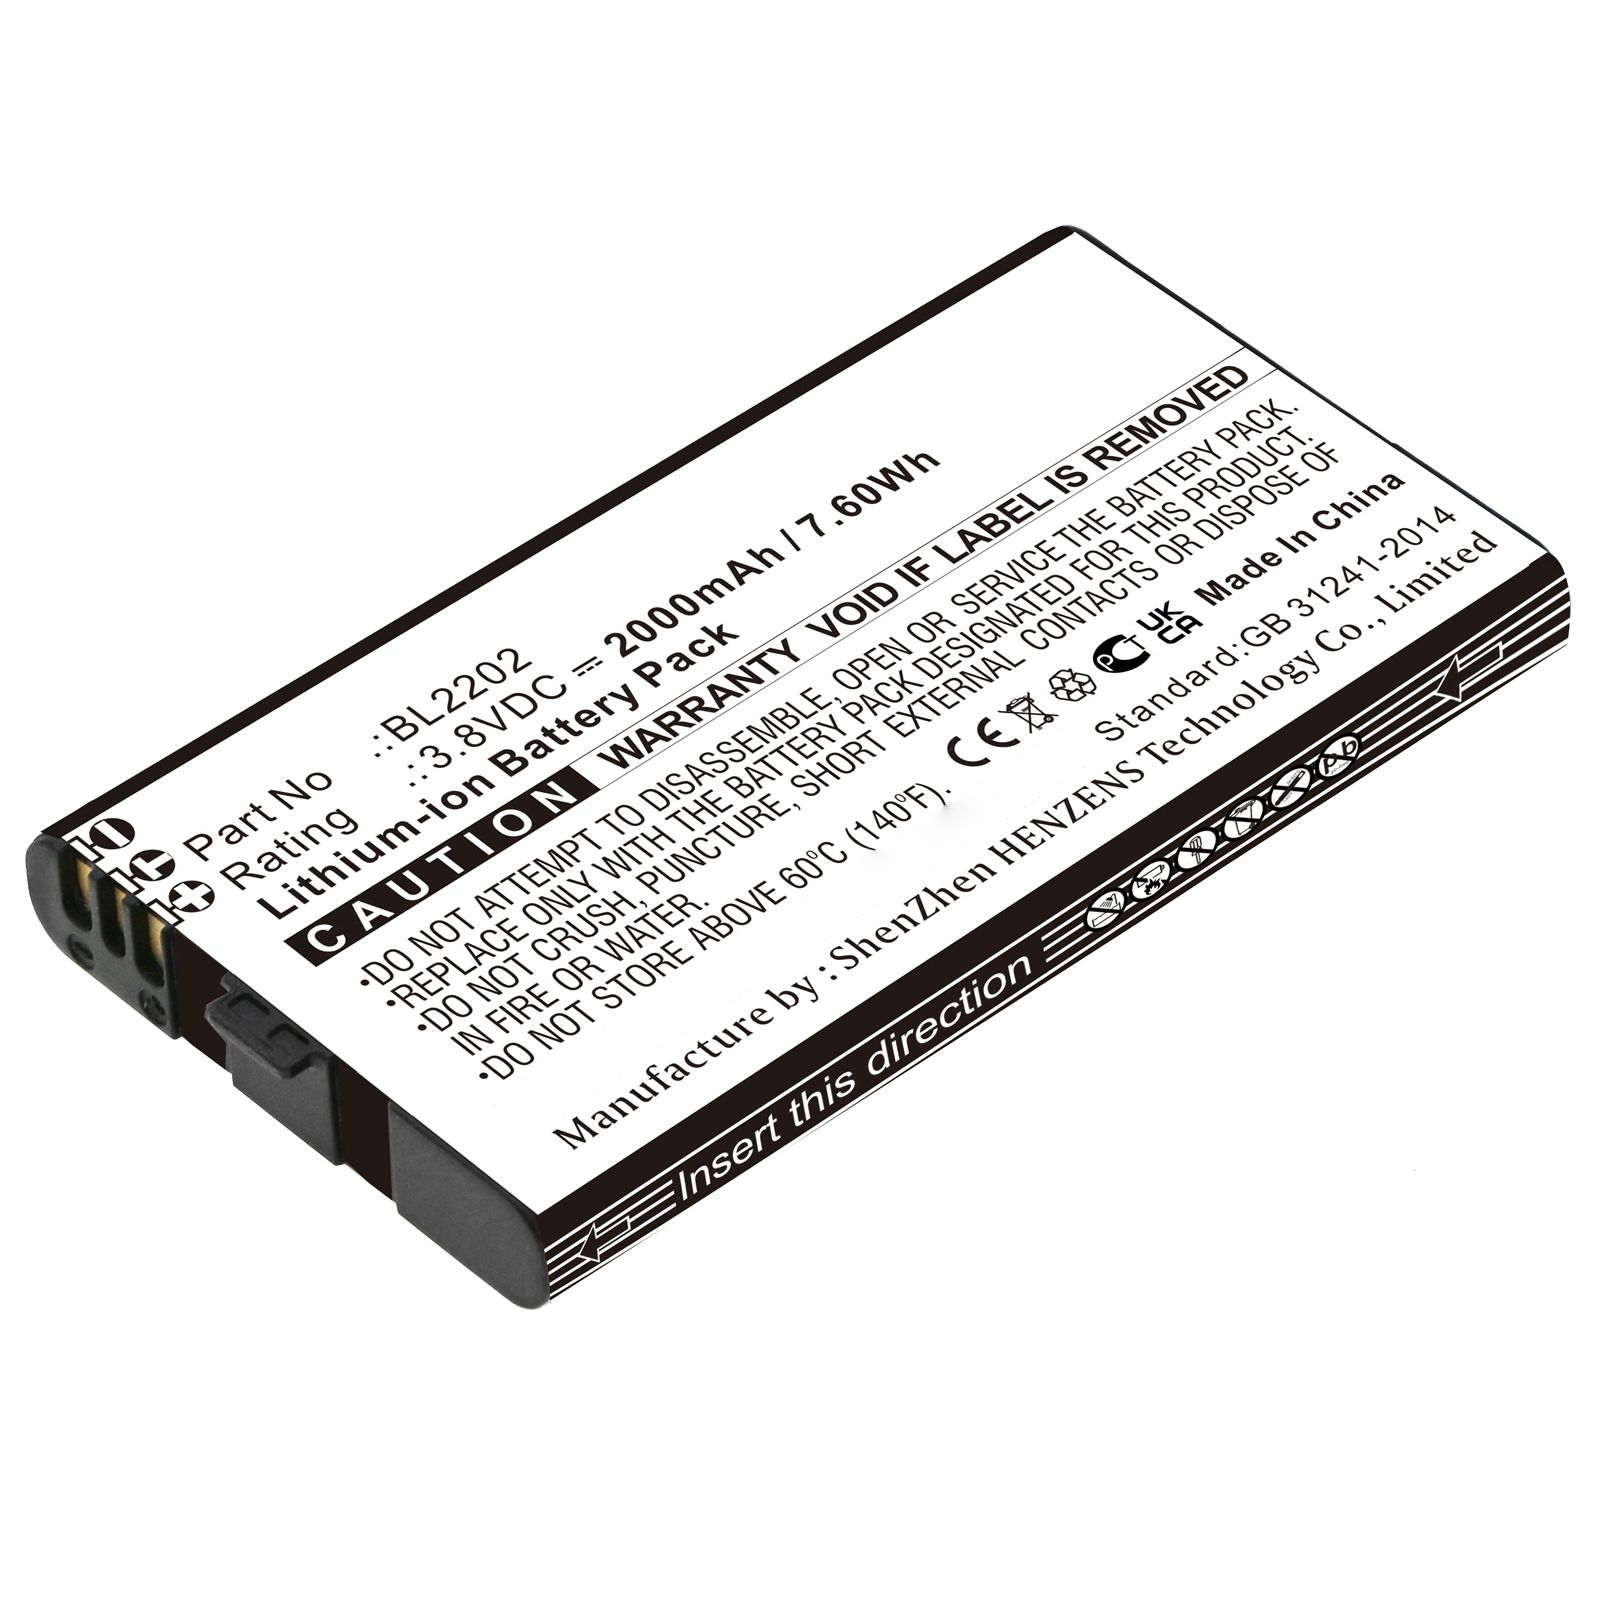 Synergy Digital 2-Way Radio Battery, Compatible with Hytera BL2202 2-Way Radio Battery (Li-ion, 3.8V, 2000mAh)